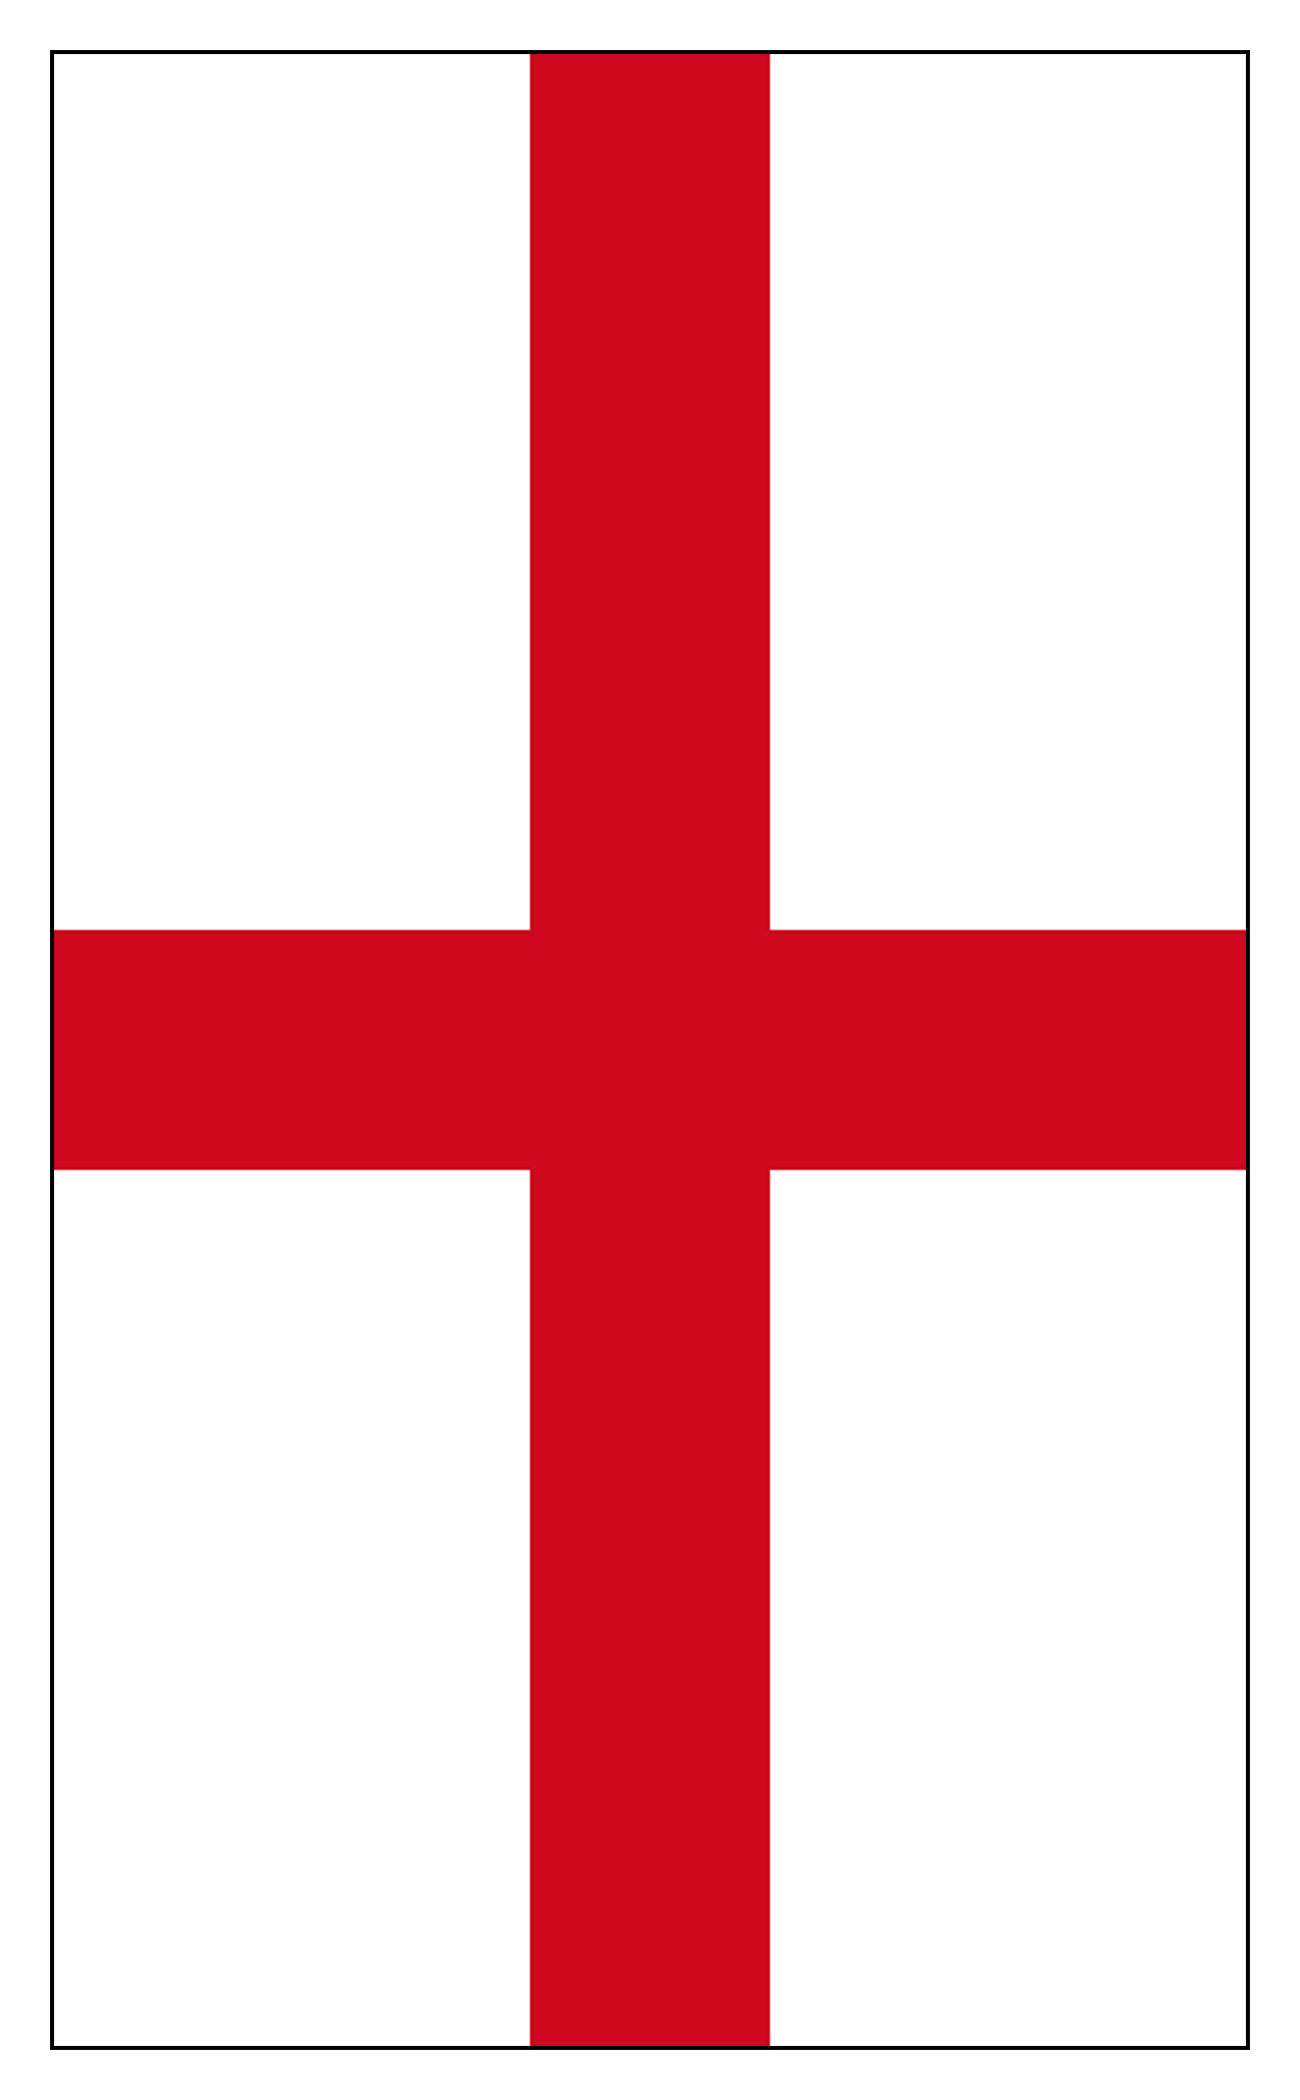 Printable St George's Cross flag